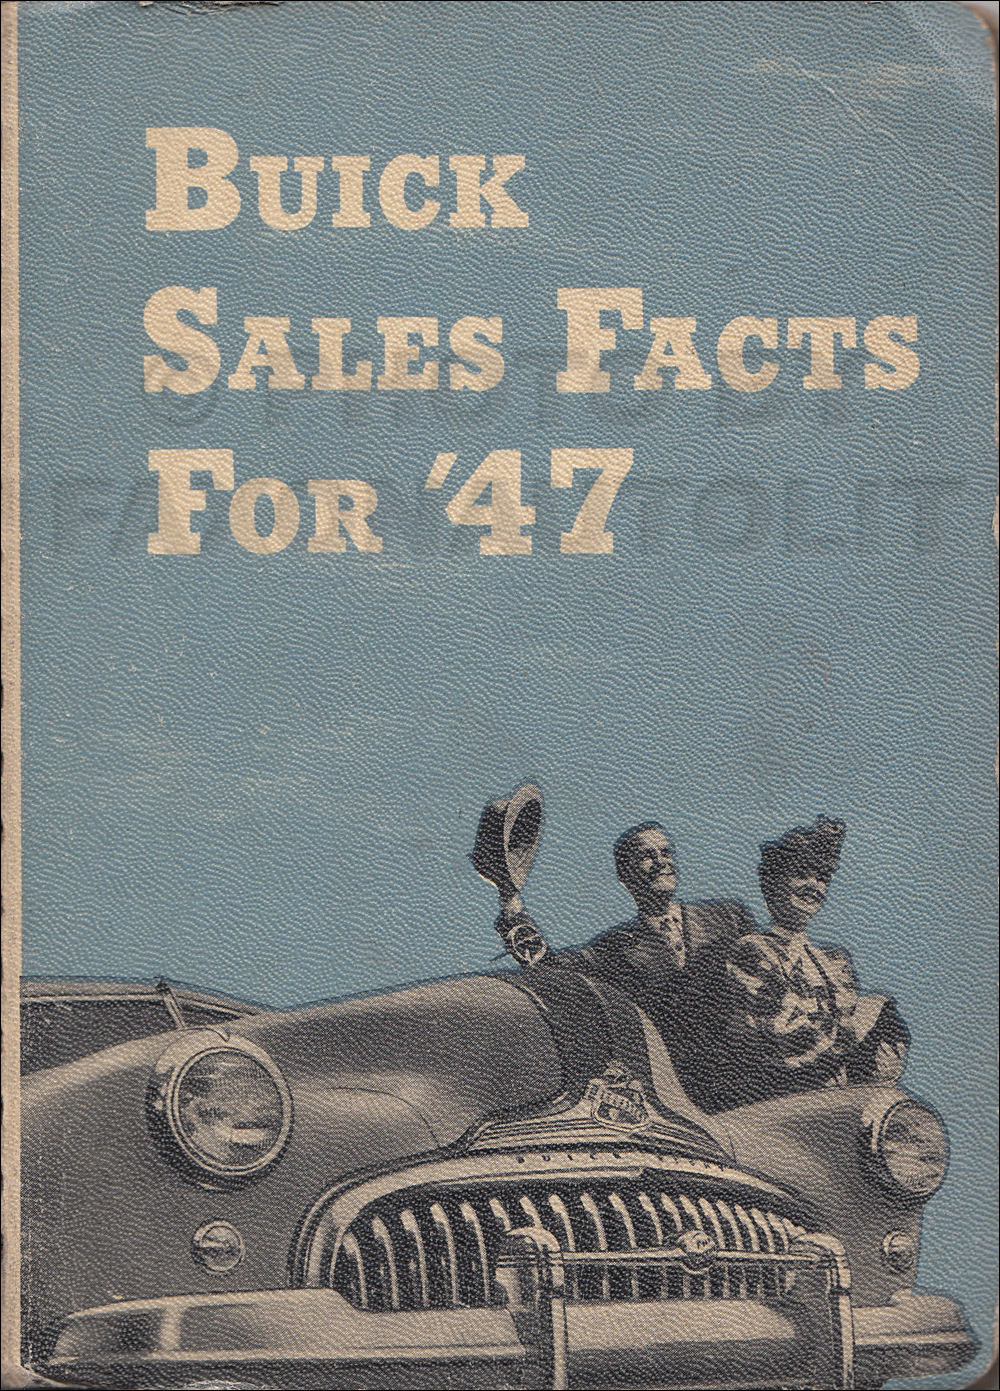 1947 Buick Sales Facts Book Original